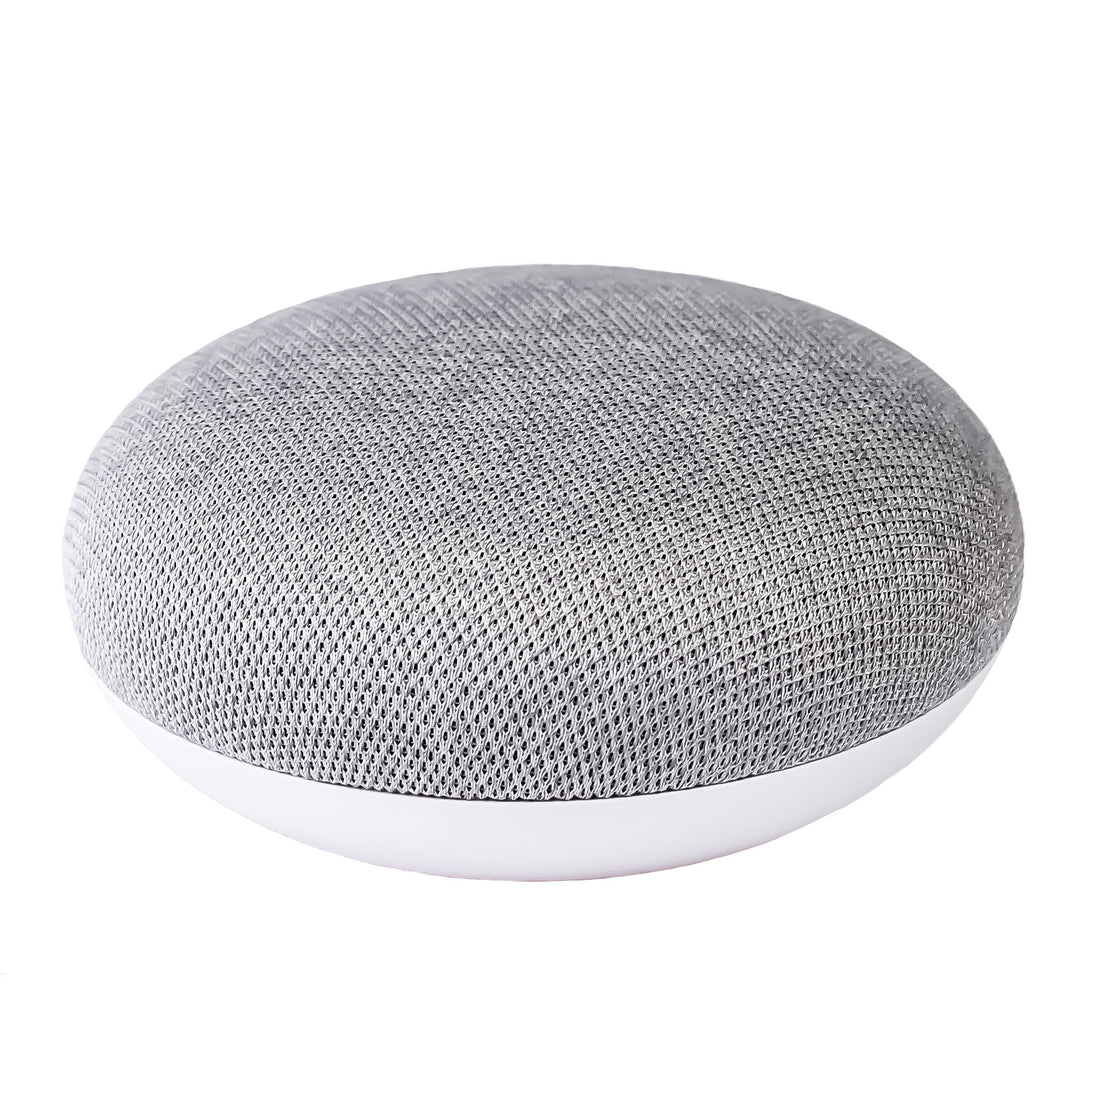 Google Home Mini Smart Speaker with Google Assistant - Chalk (Refurbished)